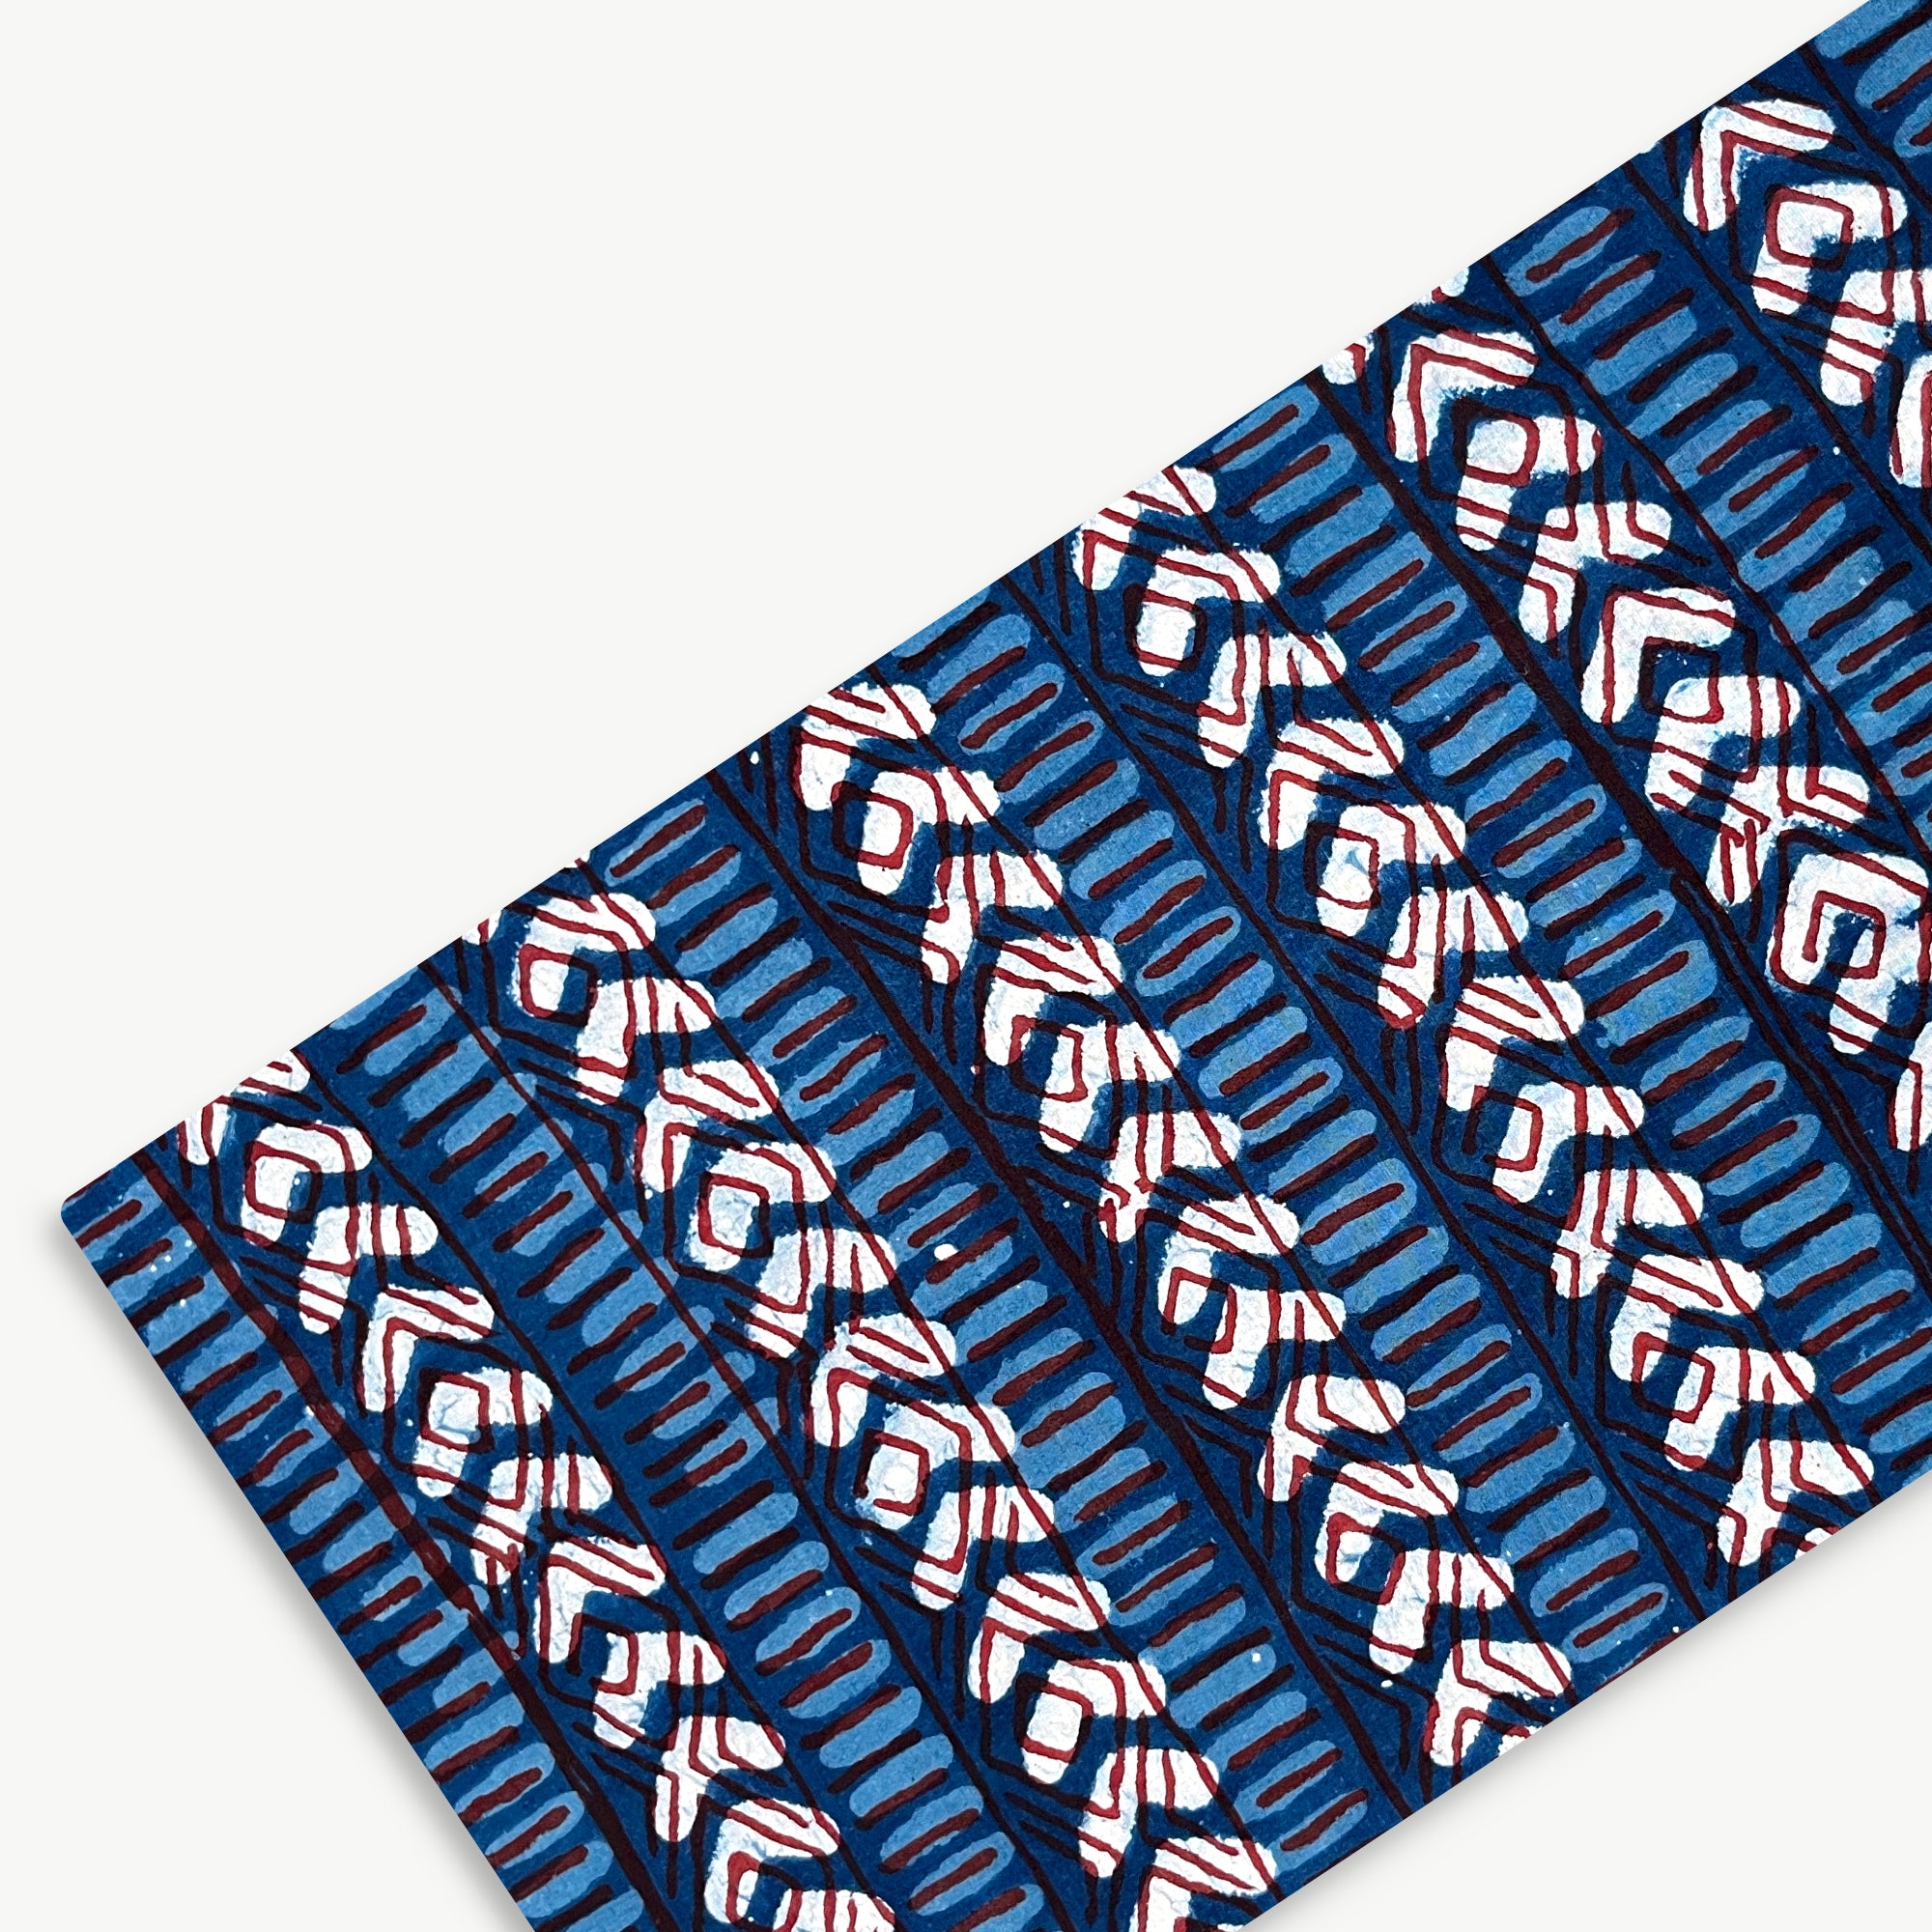 Blue Border Stripes Jahota Hand Block Printed Cotton Fabric